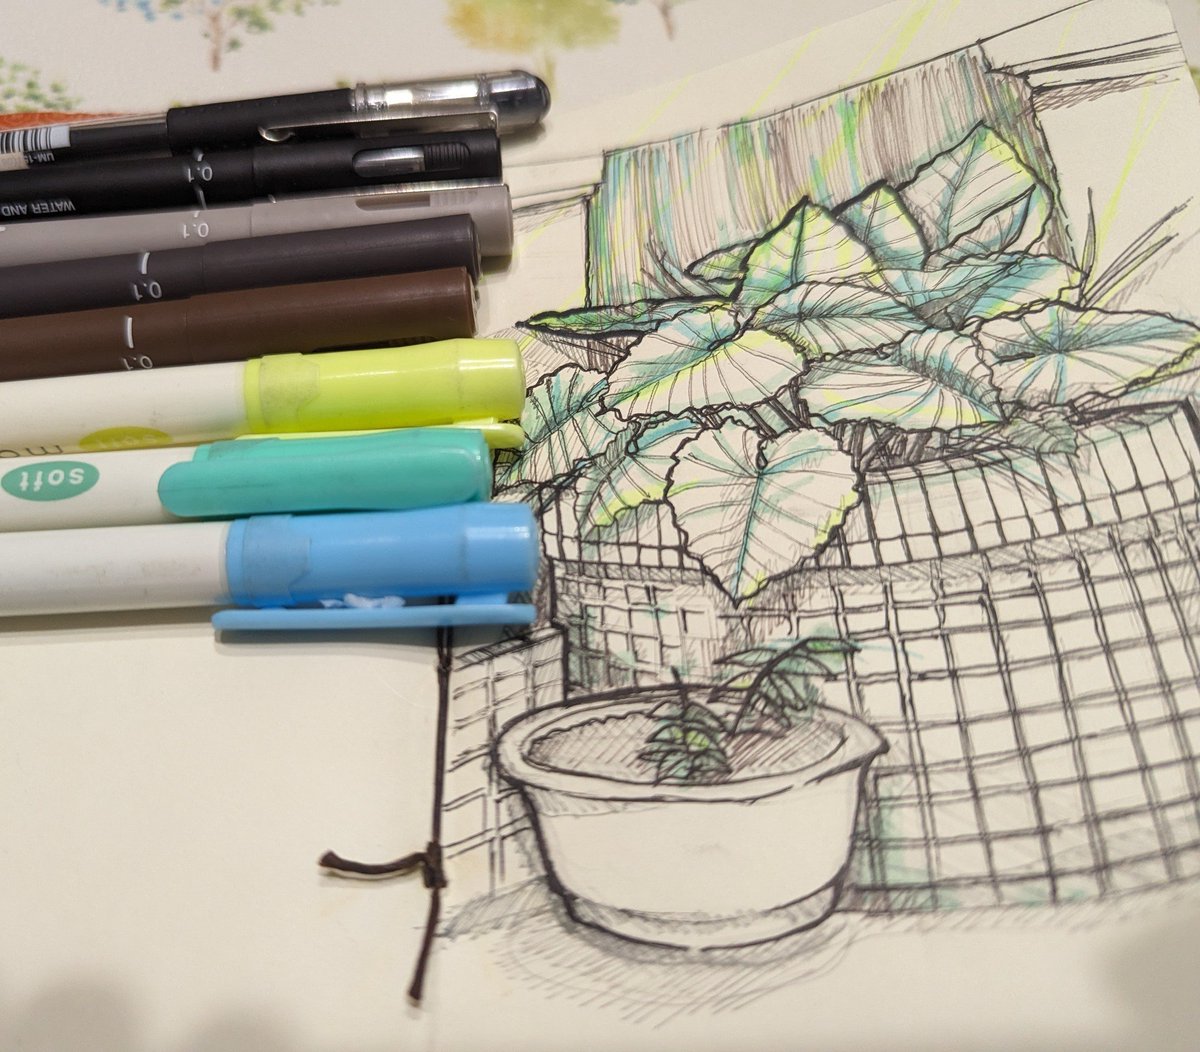 sketch of my garden

#sketch #スゲっち
#Practice 
#Pens #ボールペン画
#highlighter #蛍光ペン
#Technicalpen #マッキー
#radom